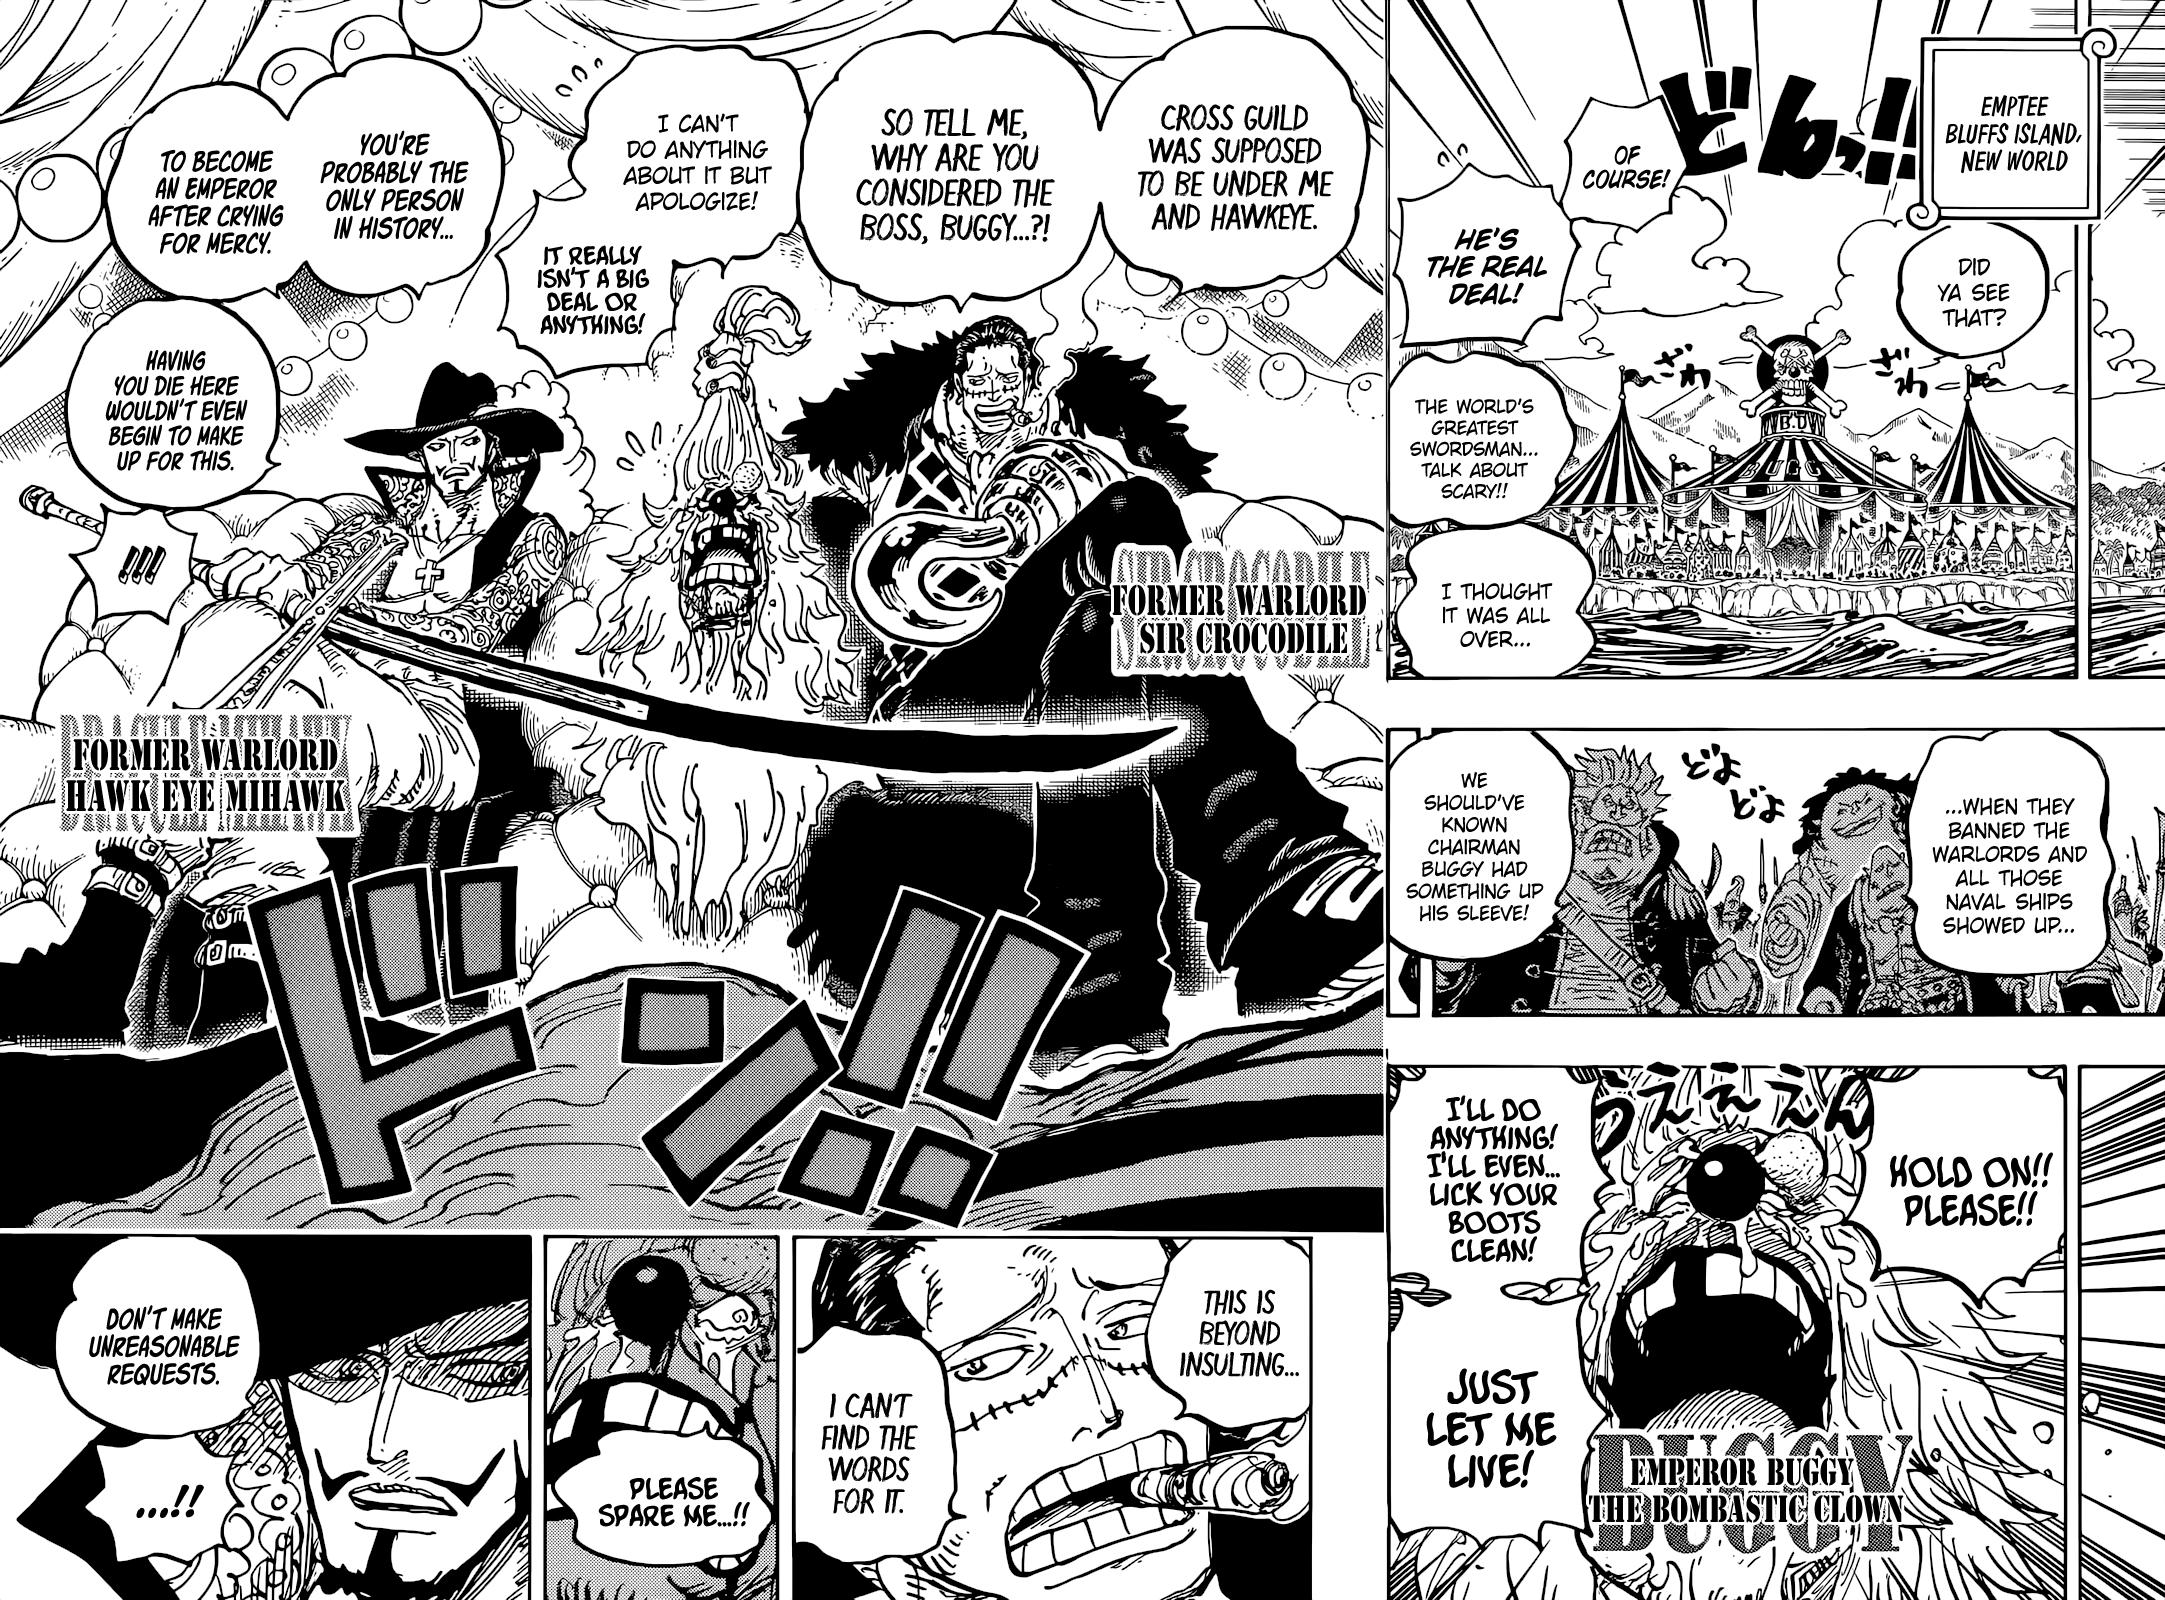 One Piece Chapter 1058 Recap & Spoilers: New Emperors